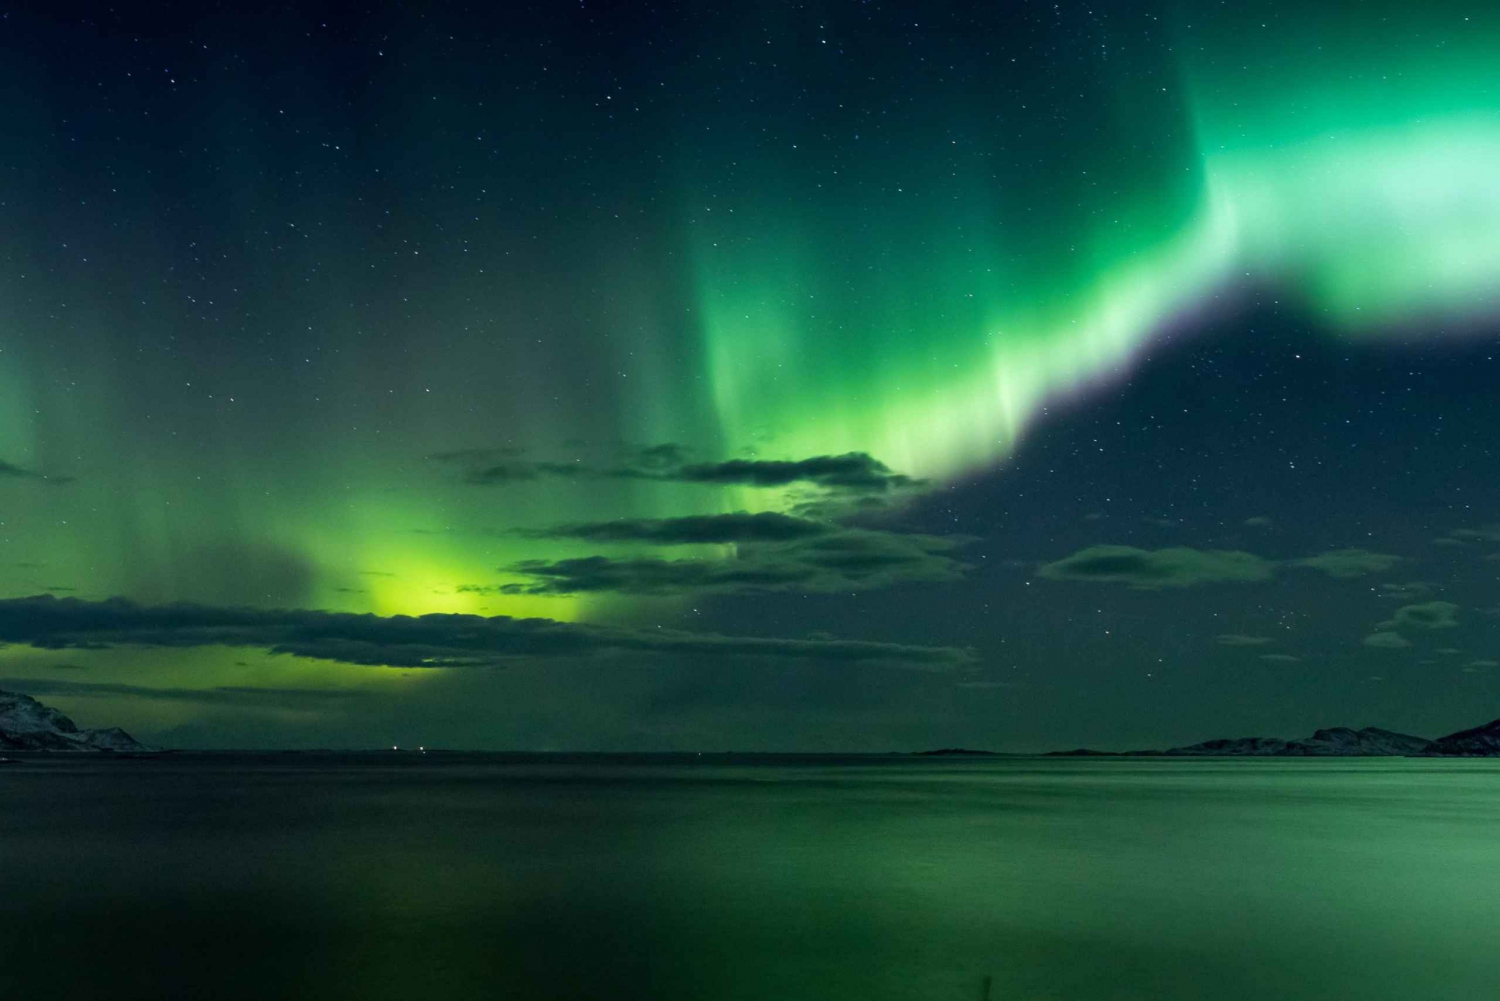 Reykjavik: Tour dell'aurora incantata con foto